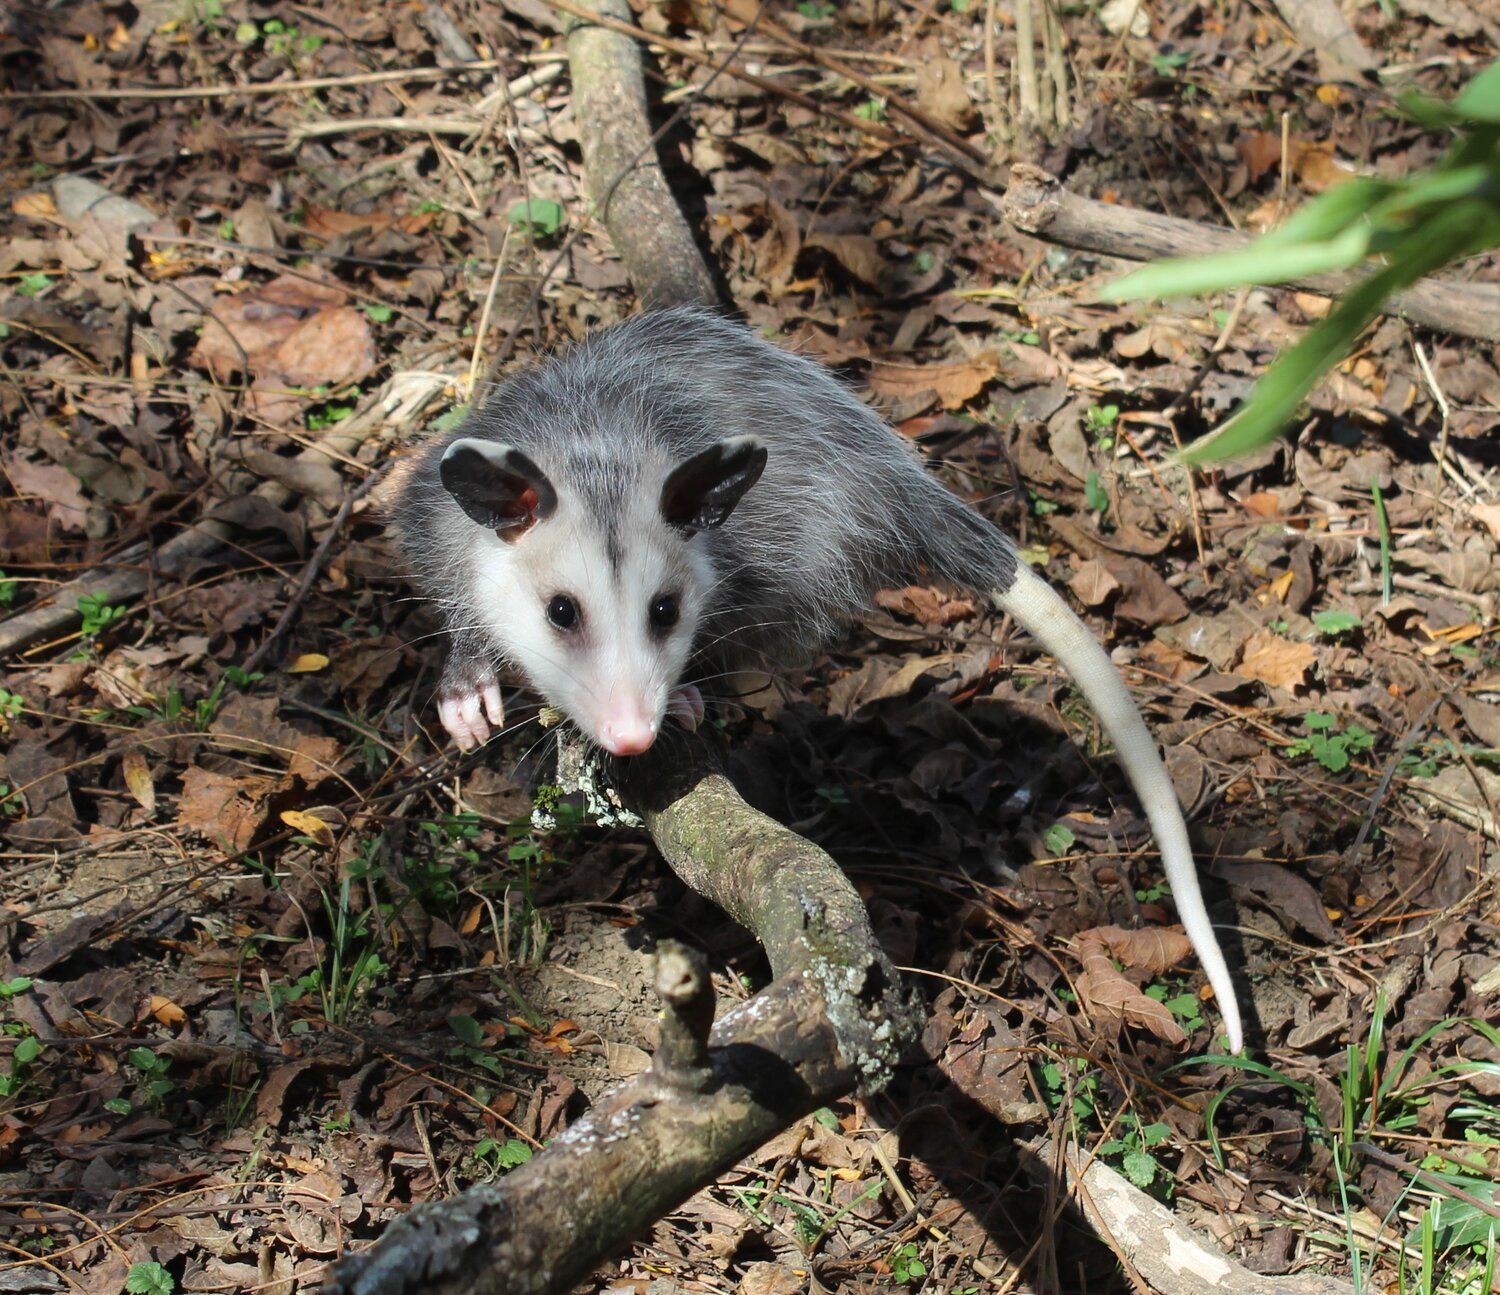 Opossums Kentucky S Only Stunning Marsupial Fox Run Environmental Education Center,Yogurt Makers At Walmart